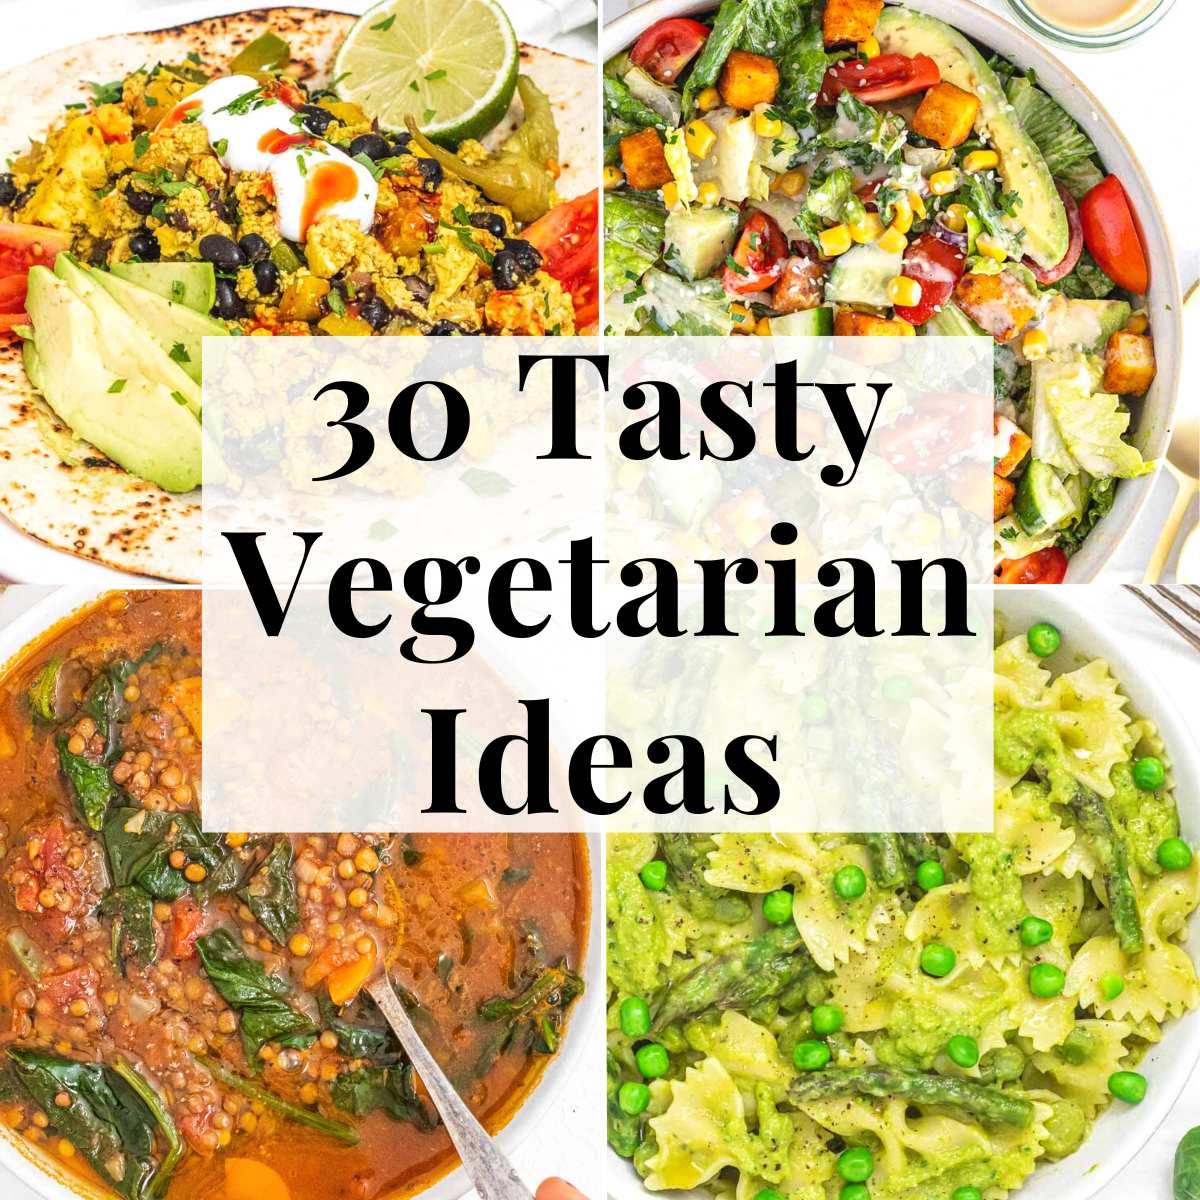 Tasty vegetarian meal ideas